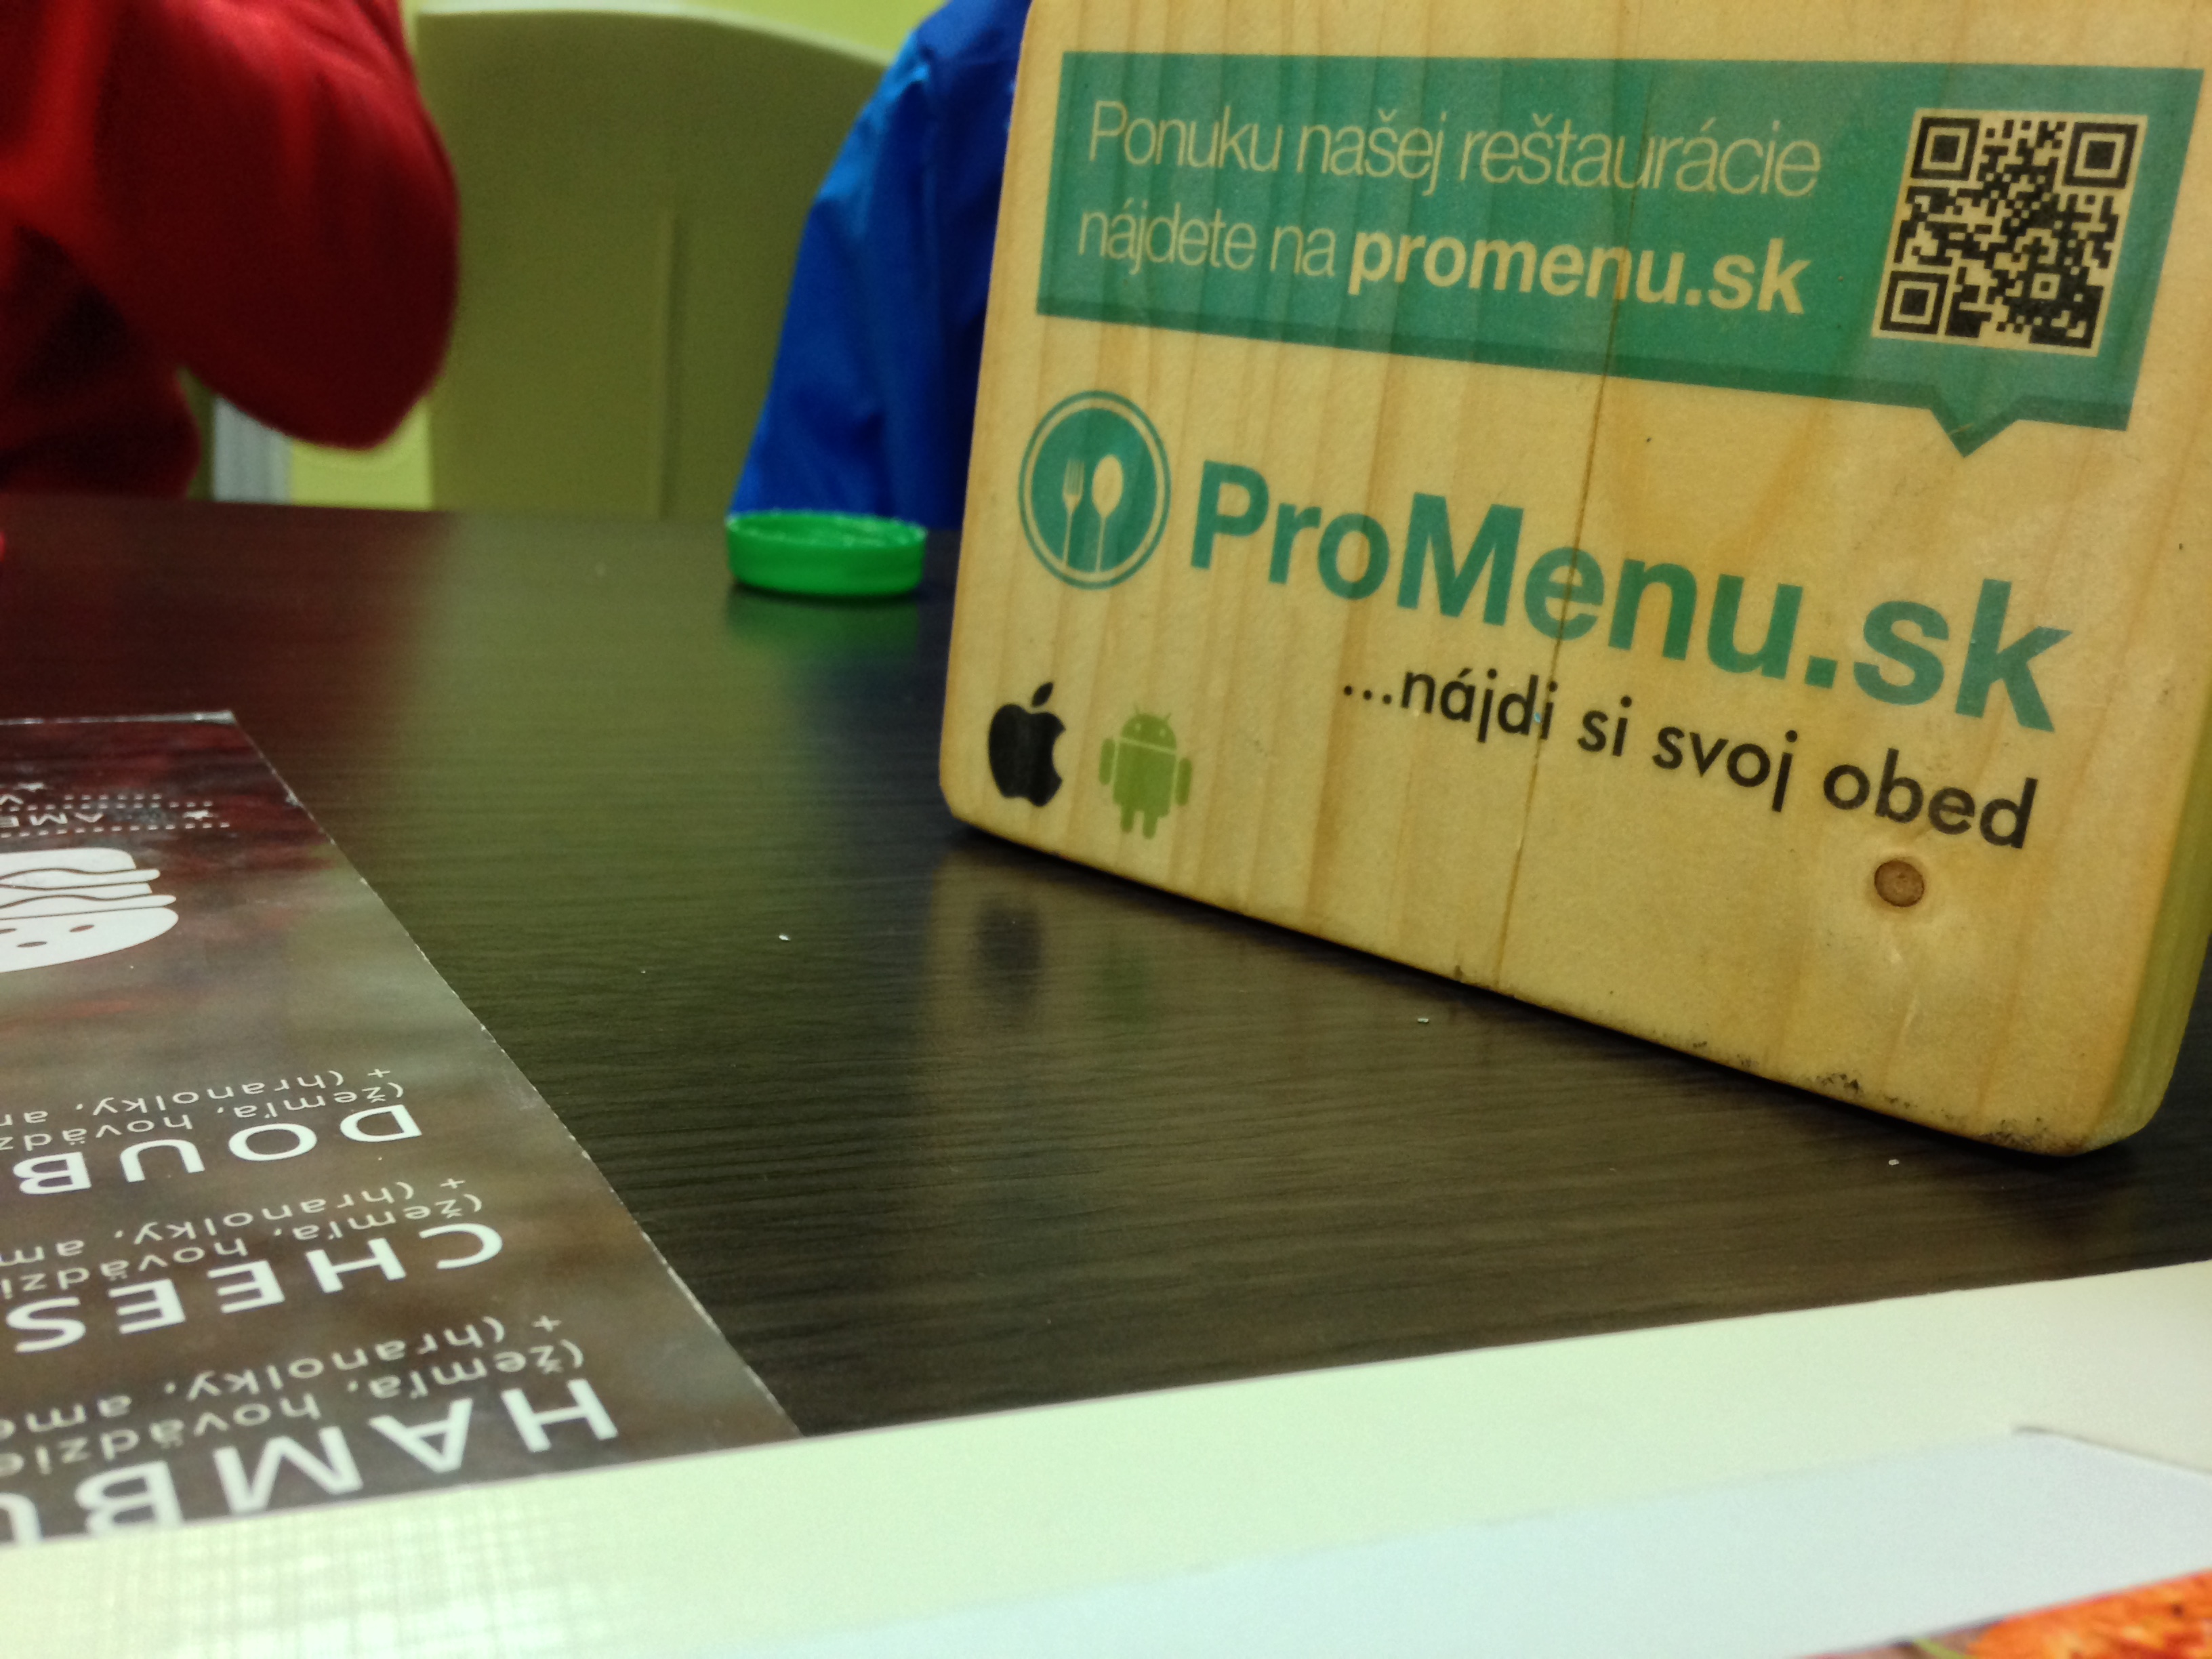 ProMenu.sk - nájdi svoj obed